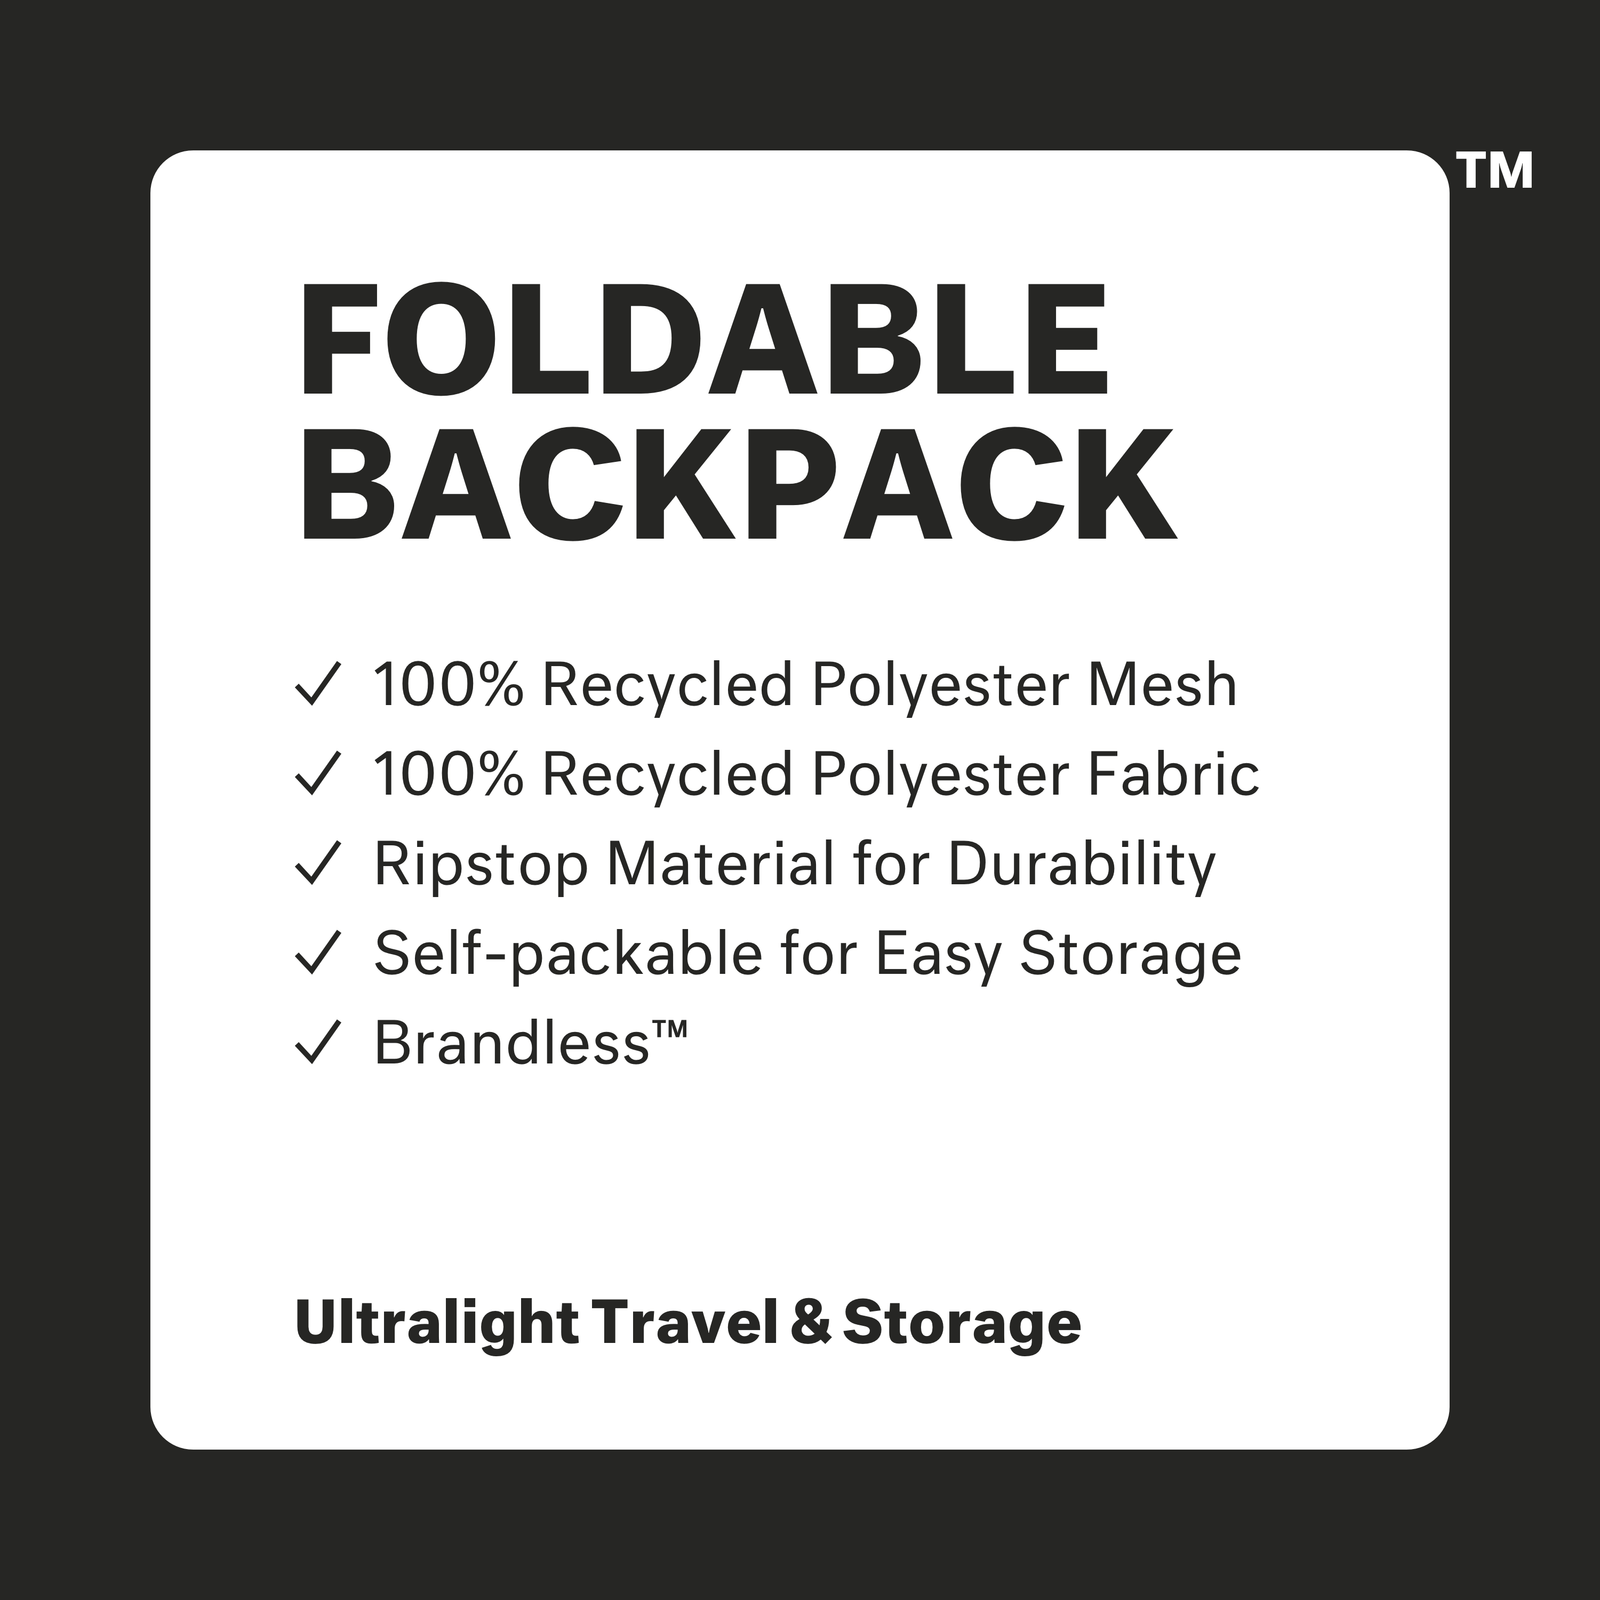 Brandless Foldable Tote Bag